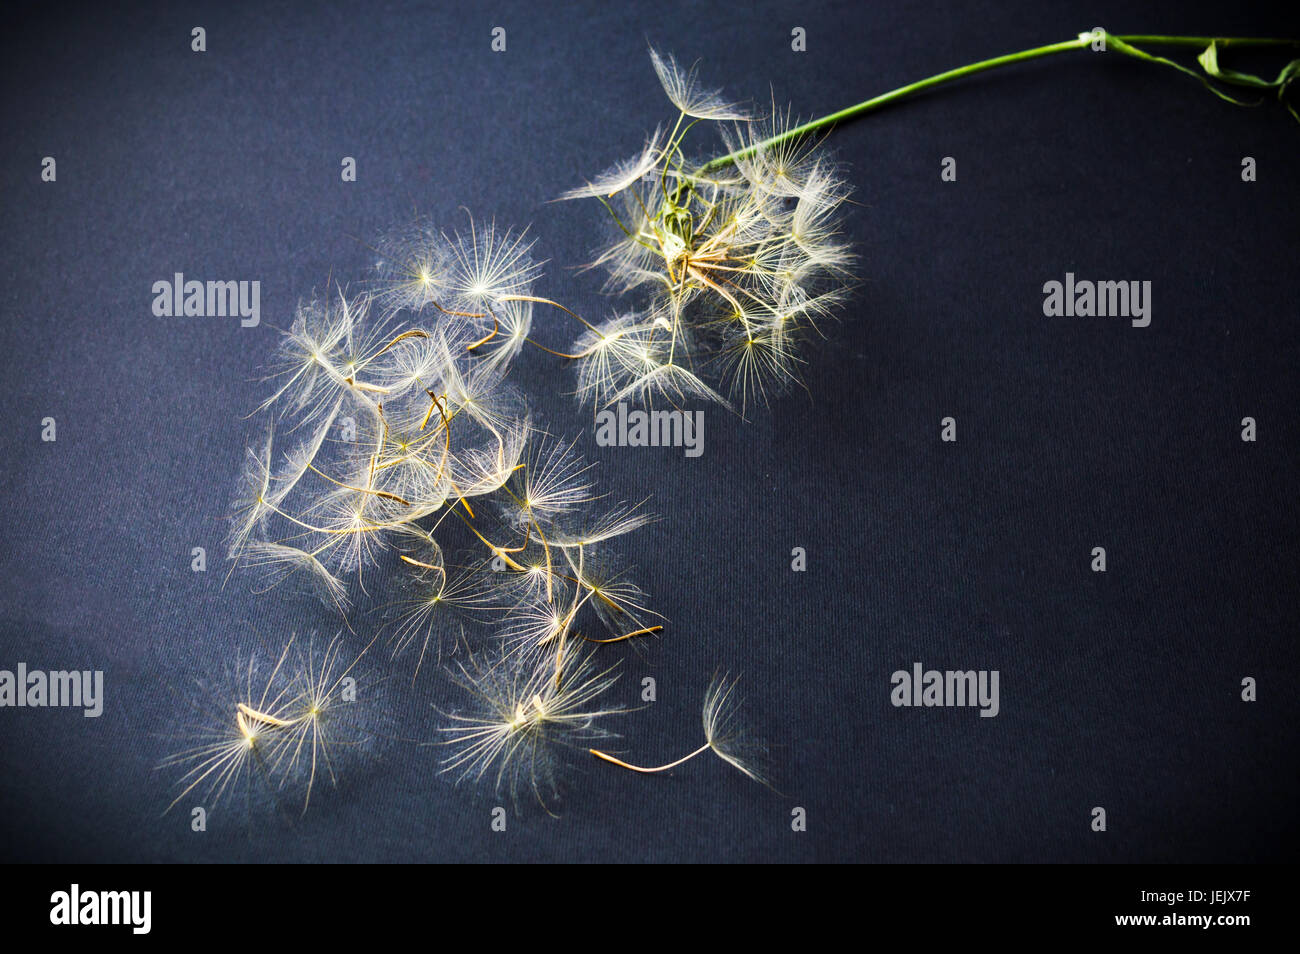 Dried white dandelion head against black background Stock Photo